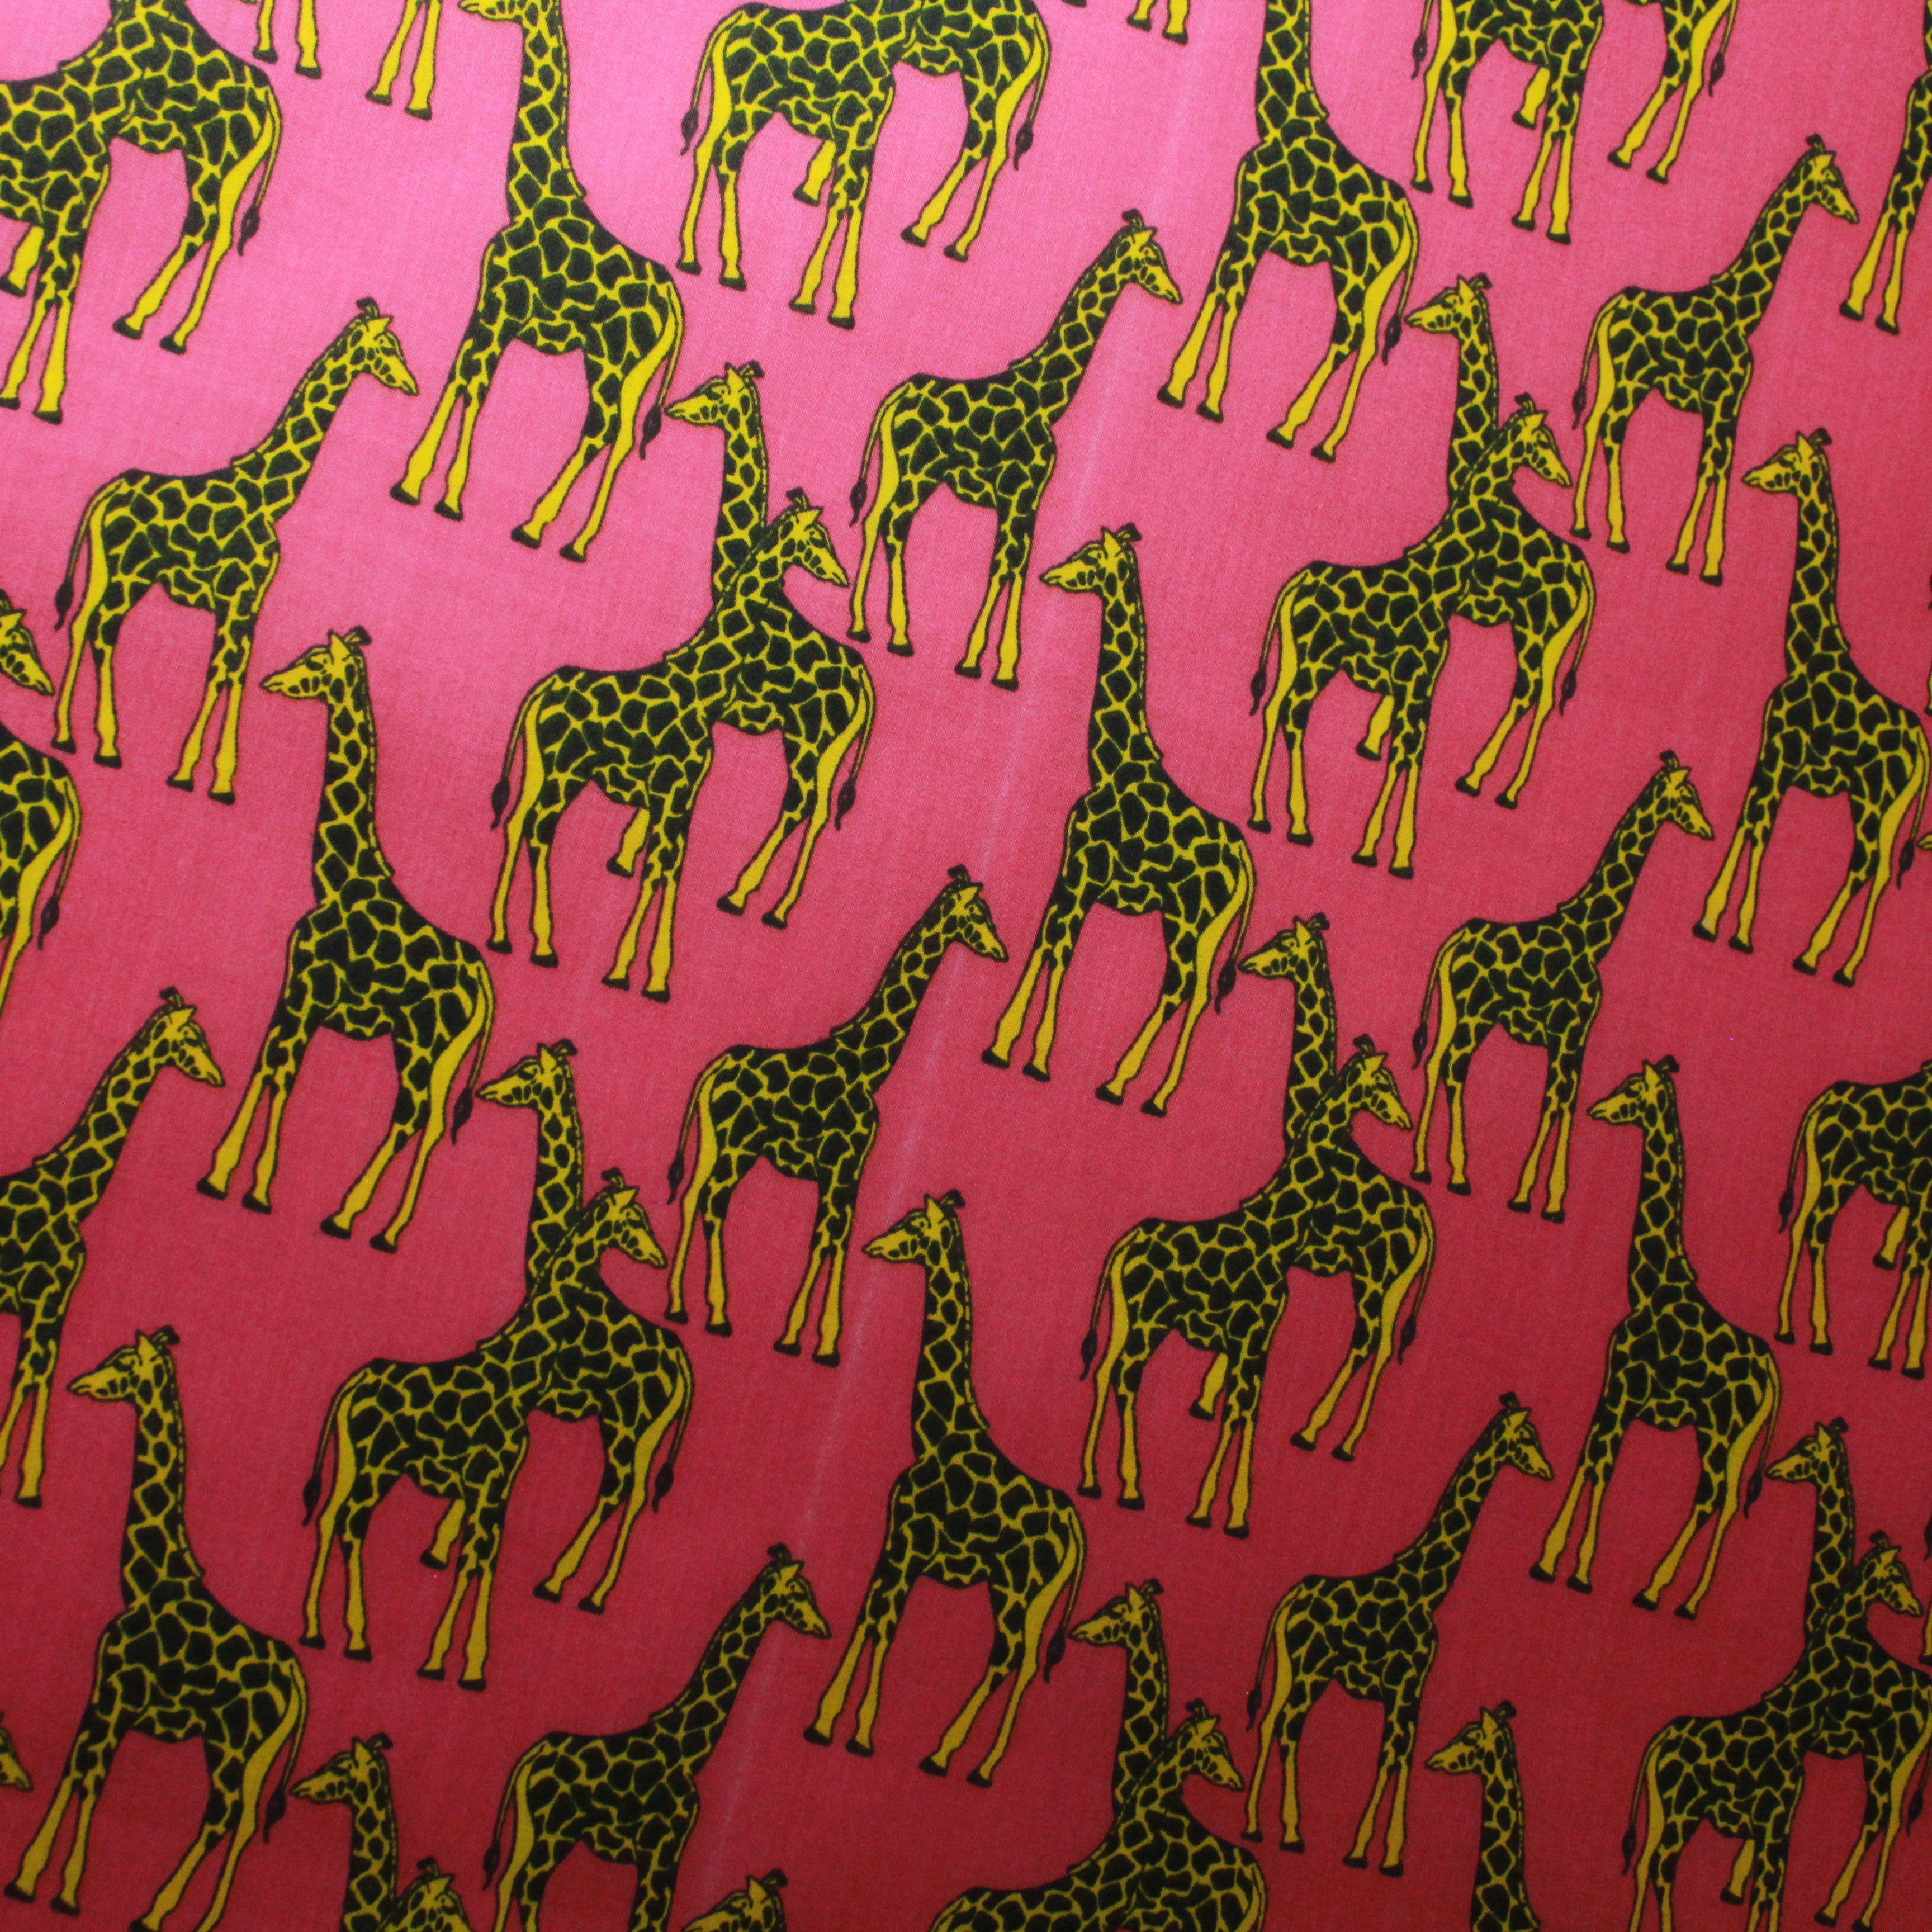 Premium Quality Poly-Cotton "Giraffe" 44" Wide Pink